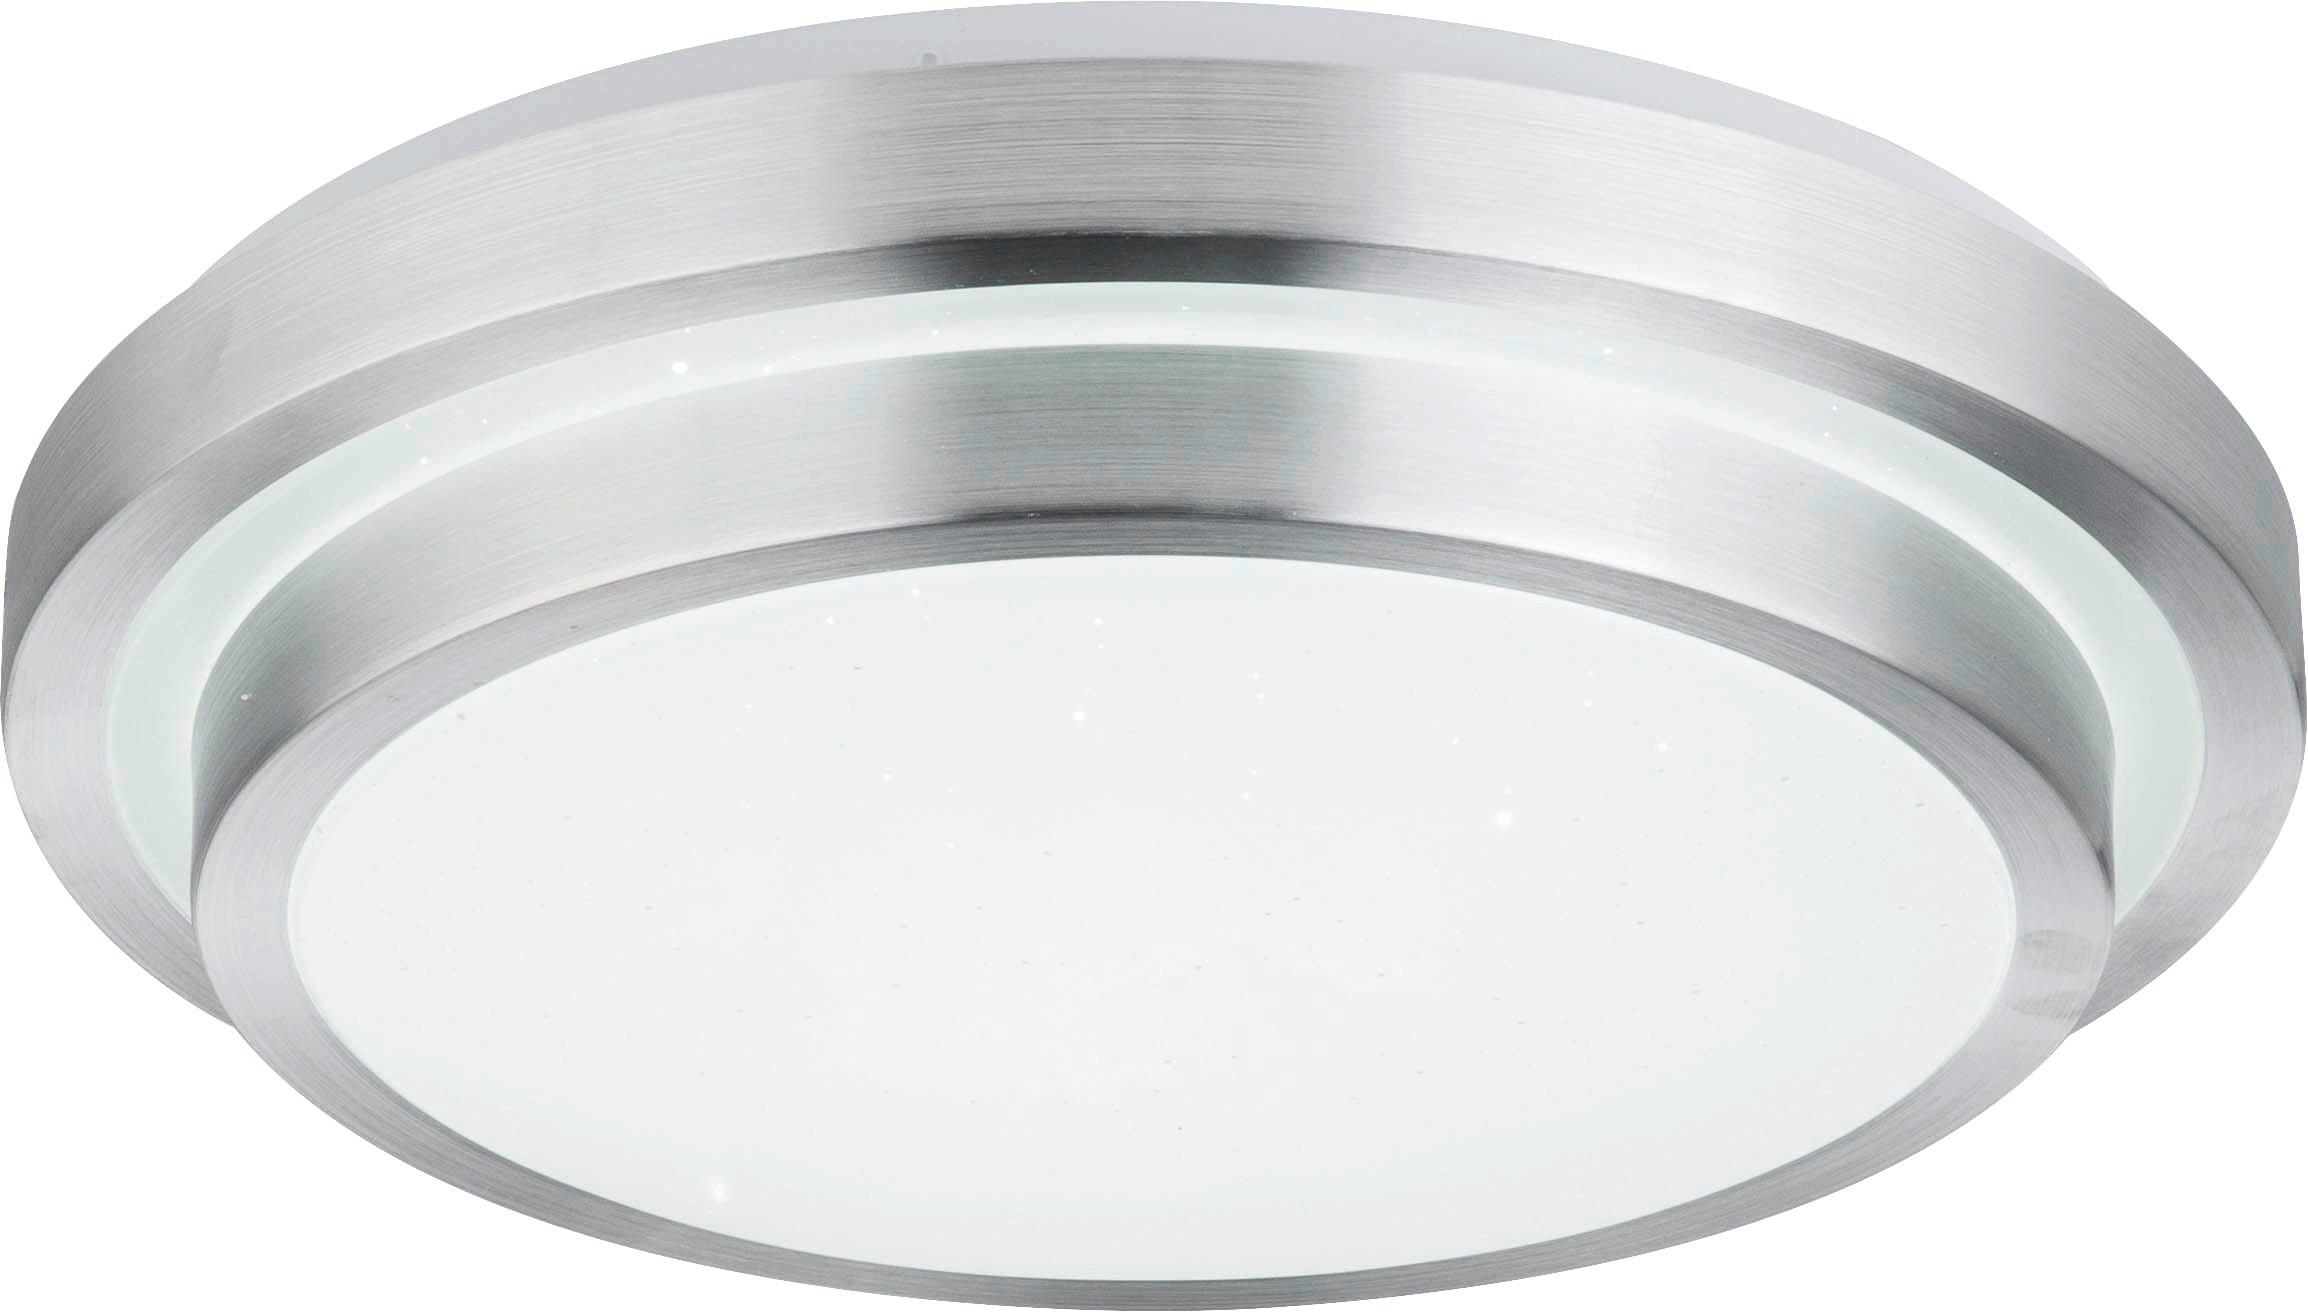 LED-Deckenleuchte Sonja max. 24 Watt - Opal/Weiß, MODERN, Kunststoff/Metall (41/10,5cm) - Globo